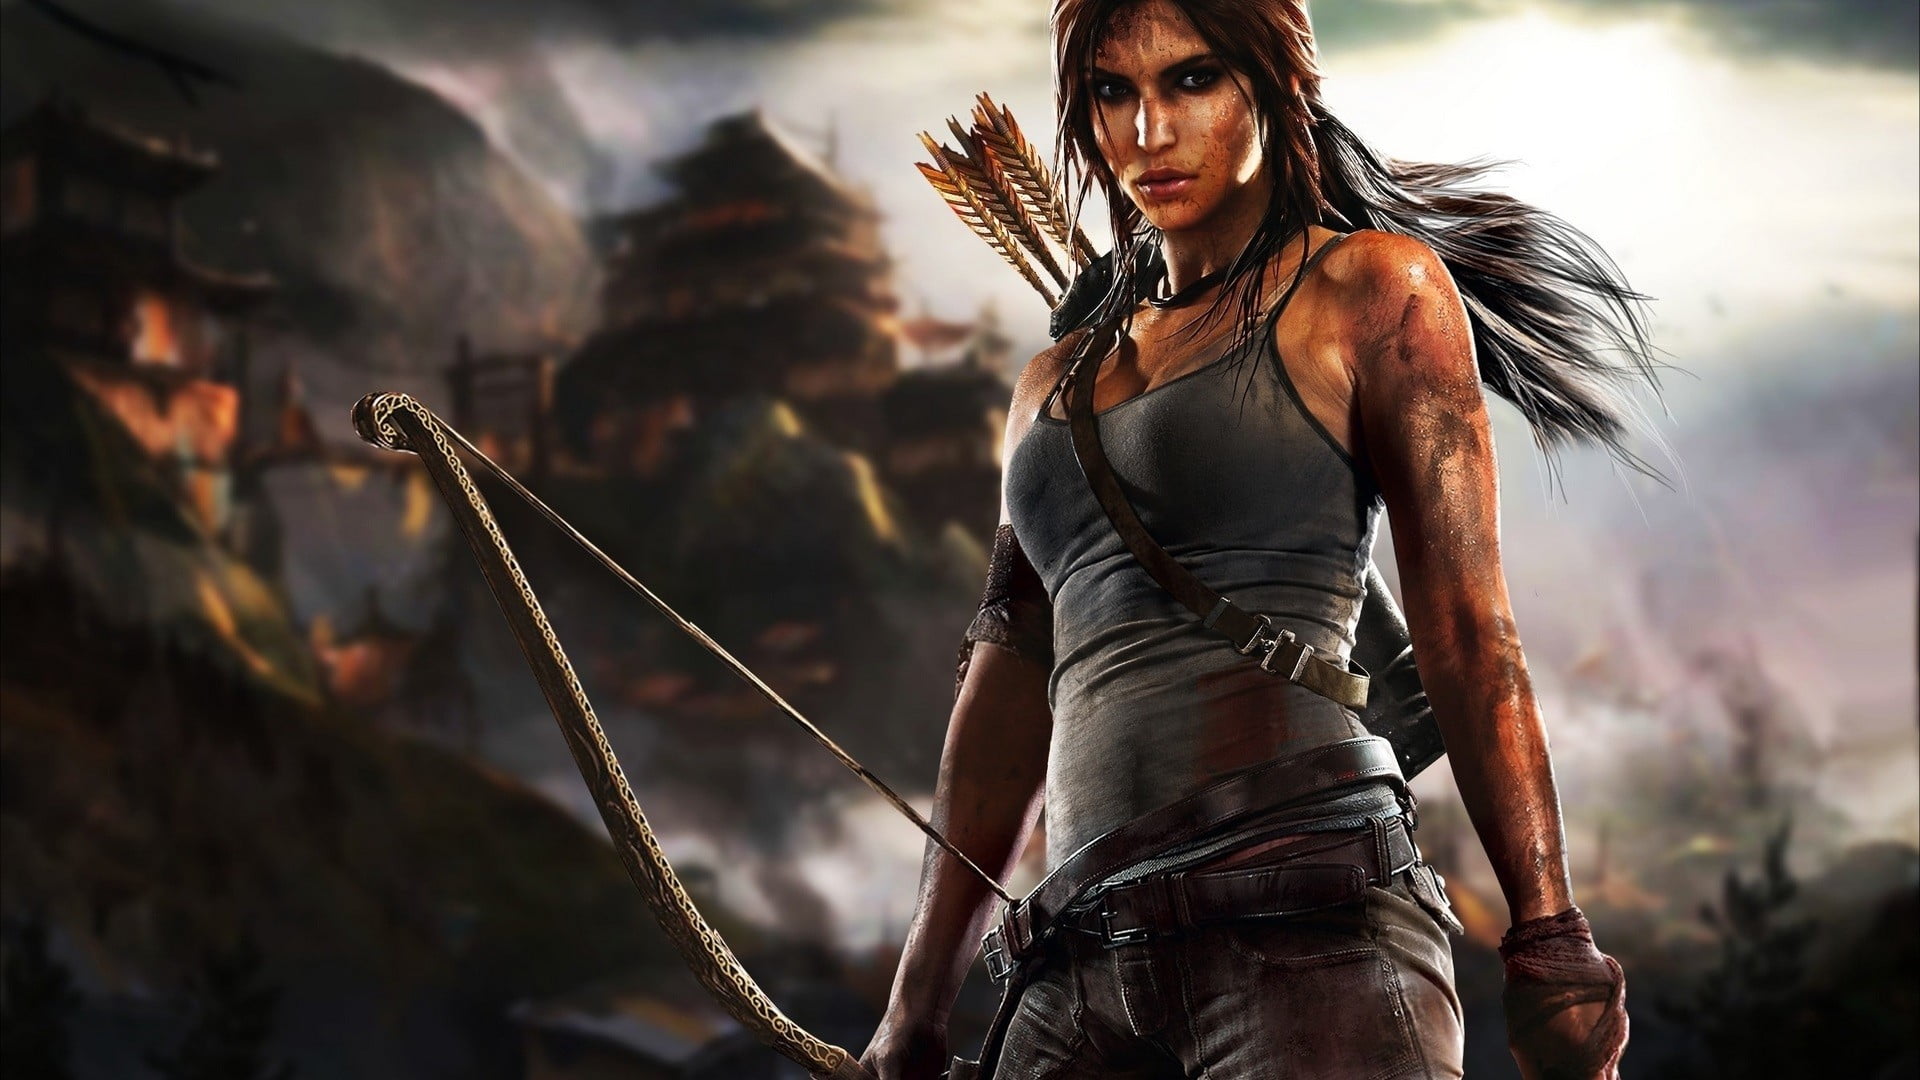 Tomb Raider game wallpaper, video games, Lara Croft, one person